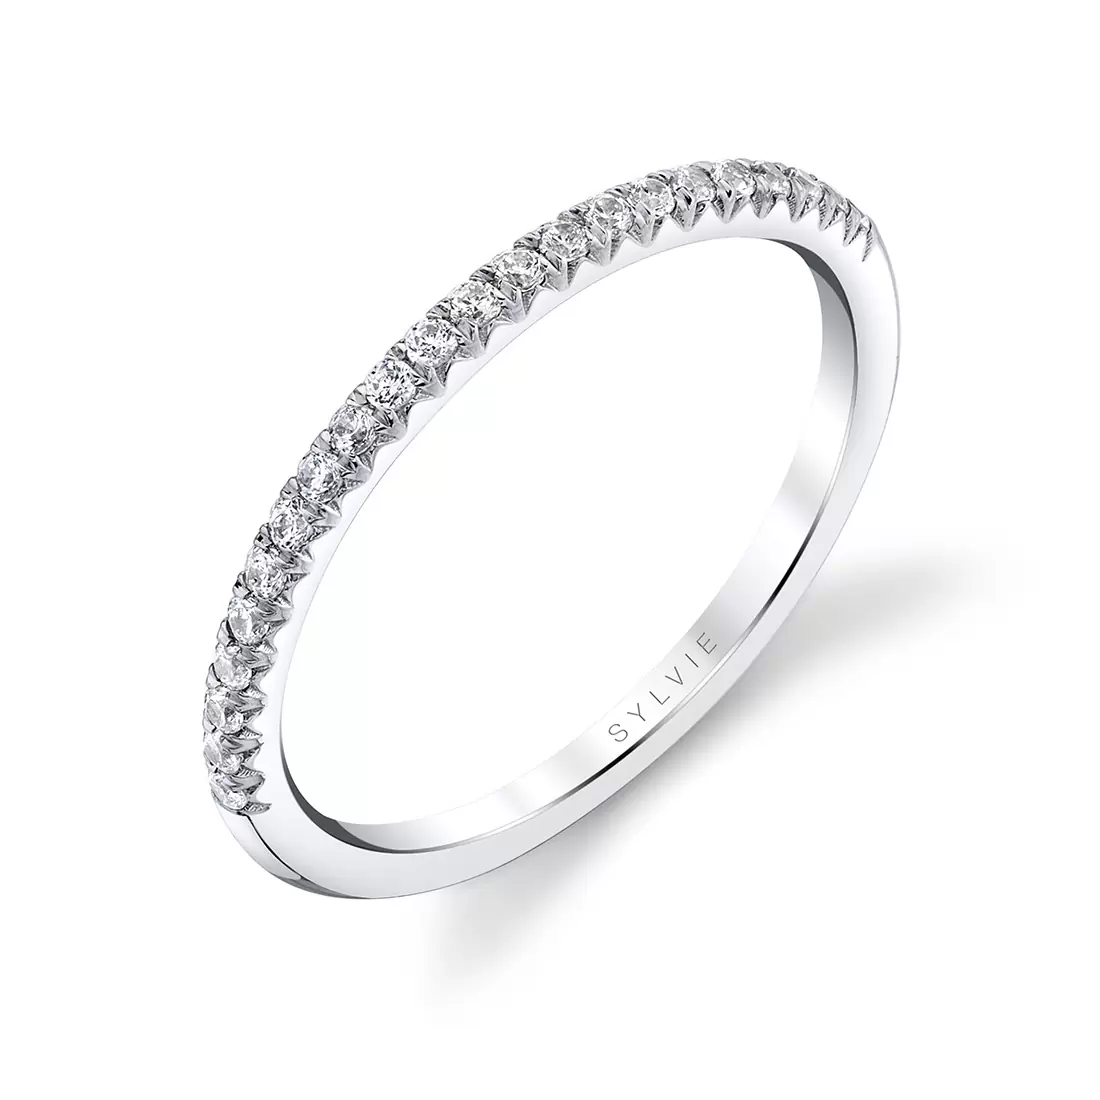 White gold, classic, diamond, wedding ring